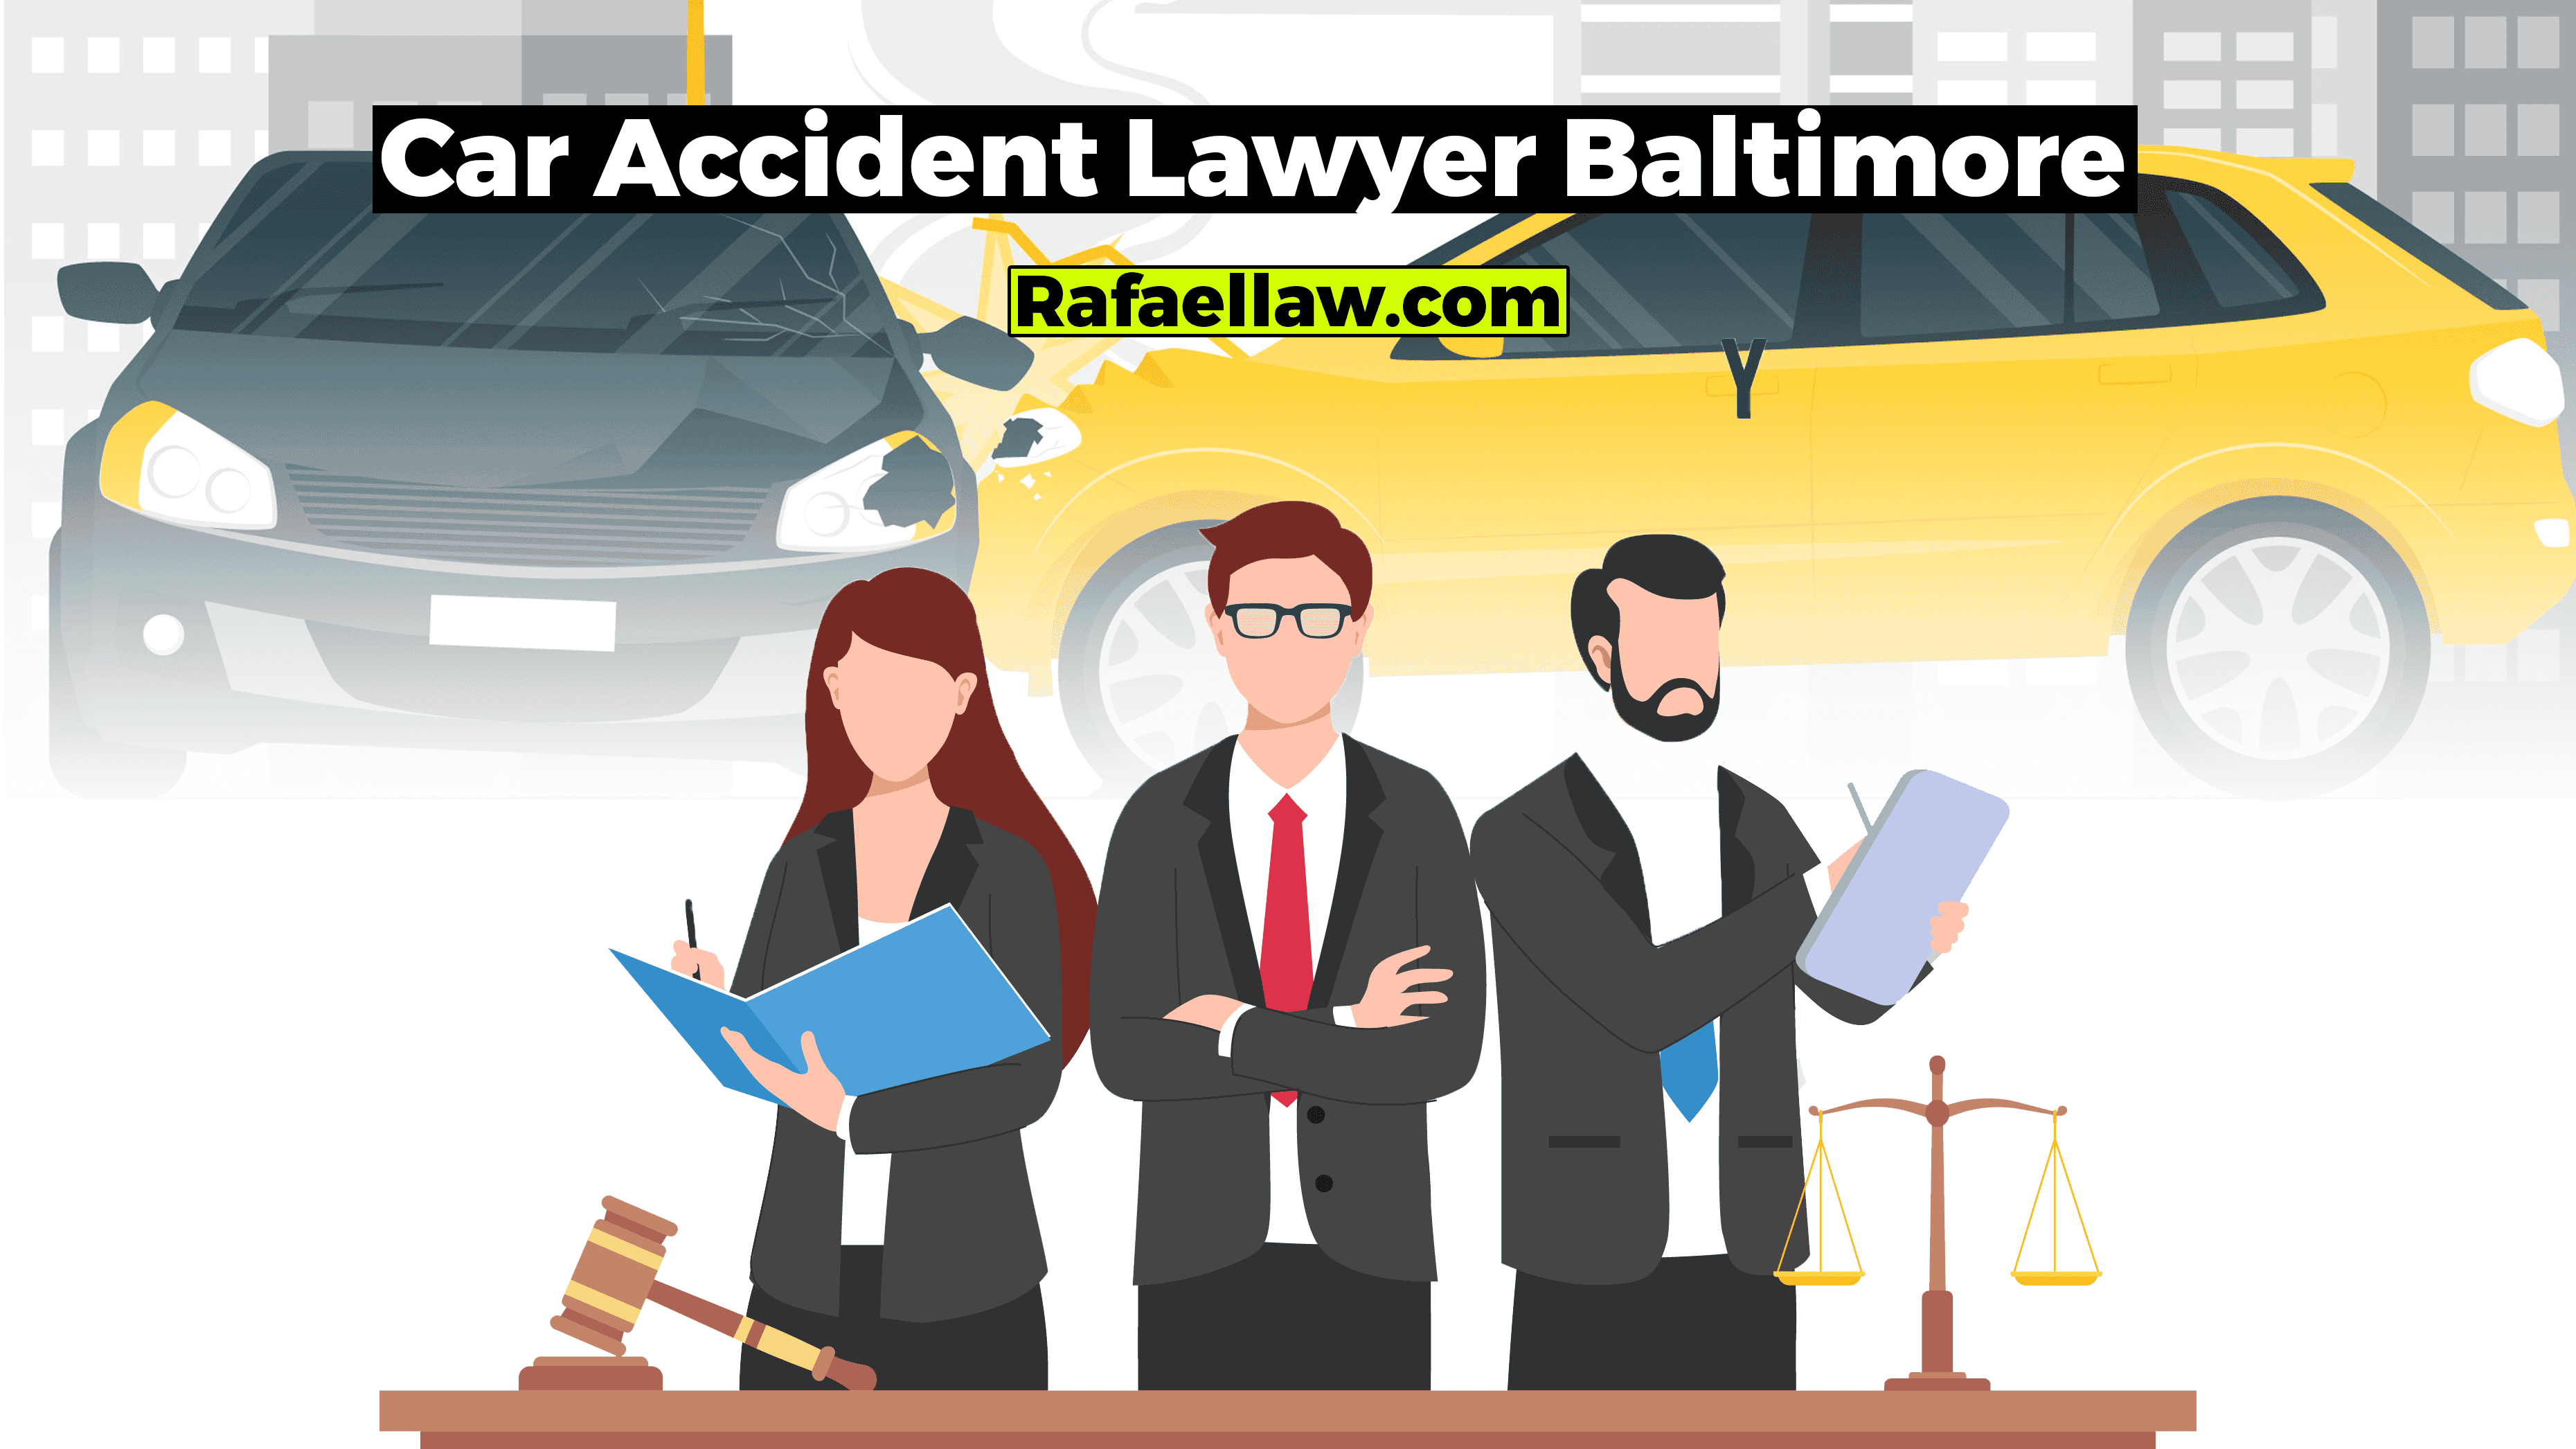 car accident lawyer baltimore rafaellaw.com